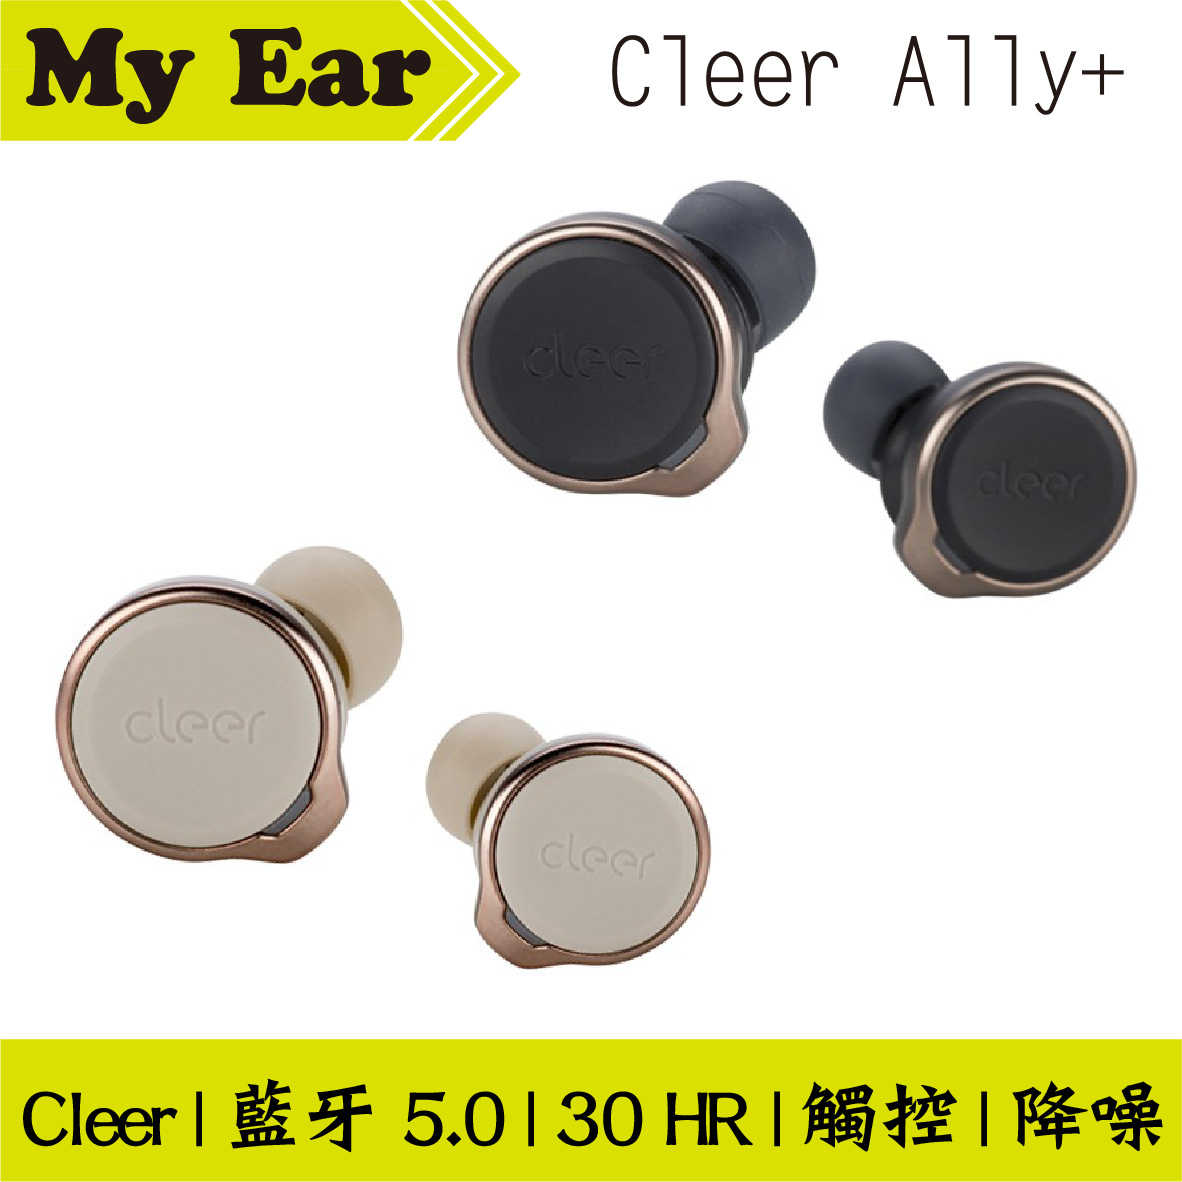 Cleer Ally+ 真無線 快充 降噪 麥克風 立體聲 藍芽 耳機 | My Ear 耳機專門店